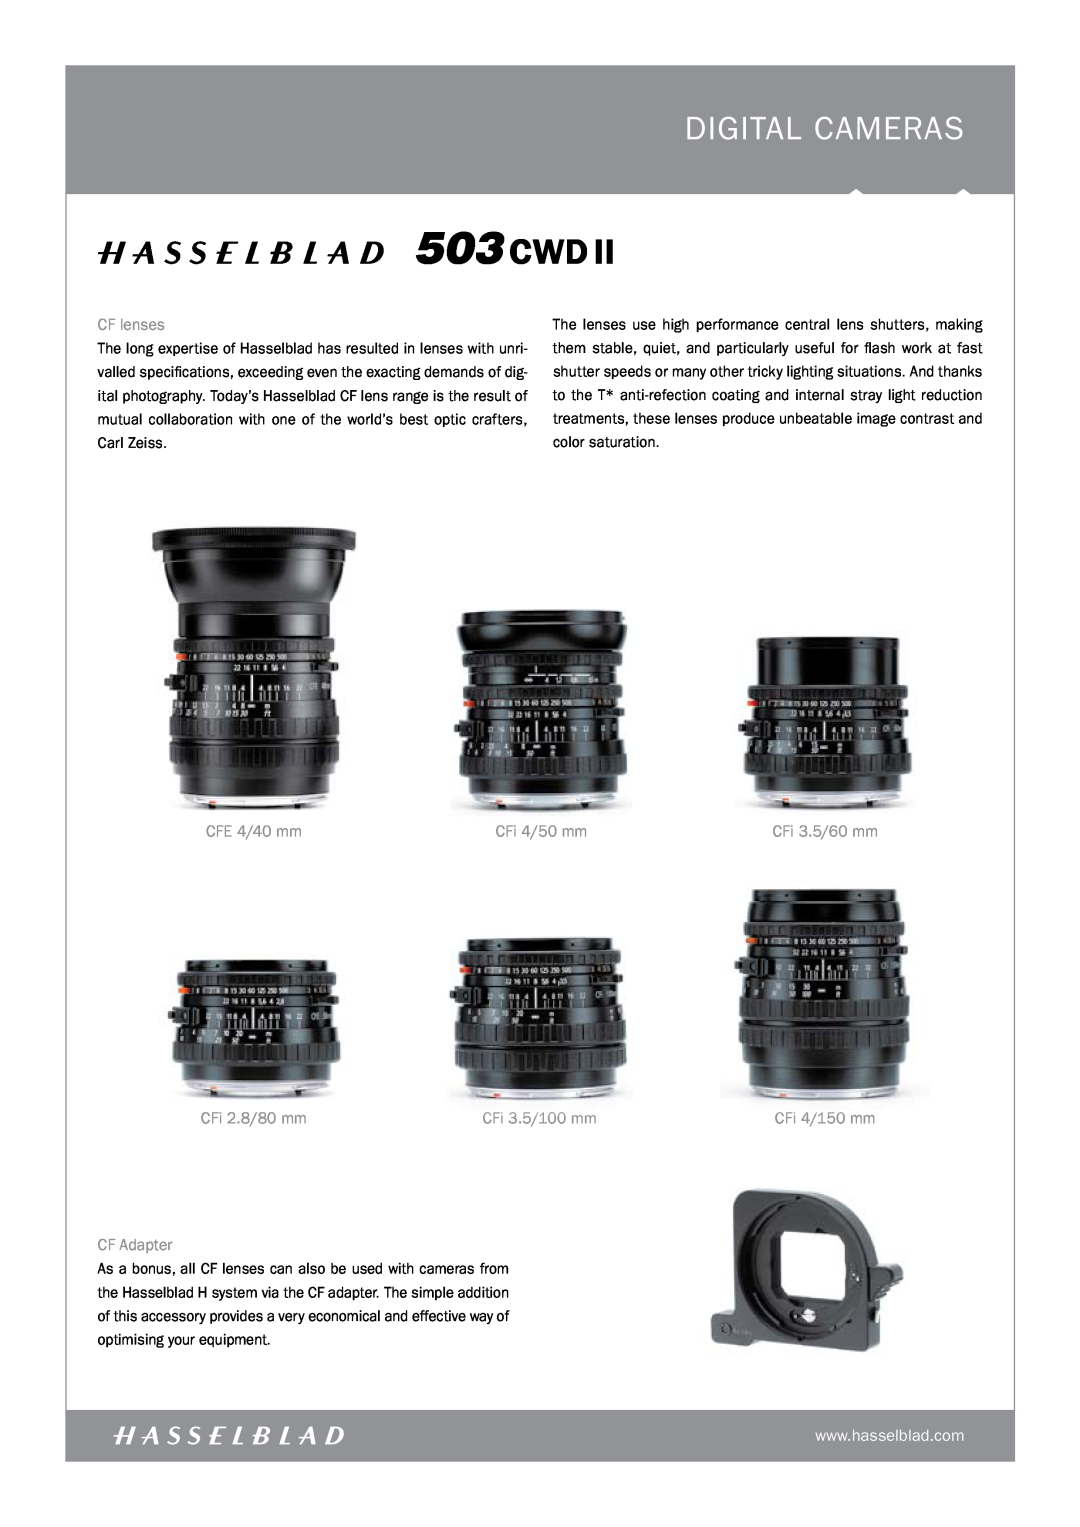 Hasselblad 503CWDII manual CF lenses, CFE 4/40 mm, CFi 4/50 mm, CFi 2.8/80 mm, CFi 3.5/100 mm, CF Adapter, digital CAMERAS 